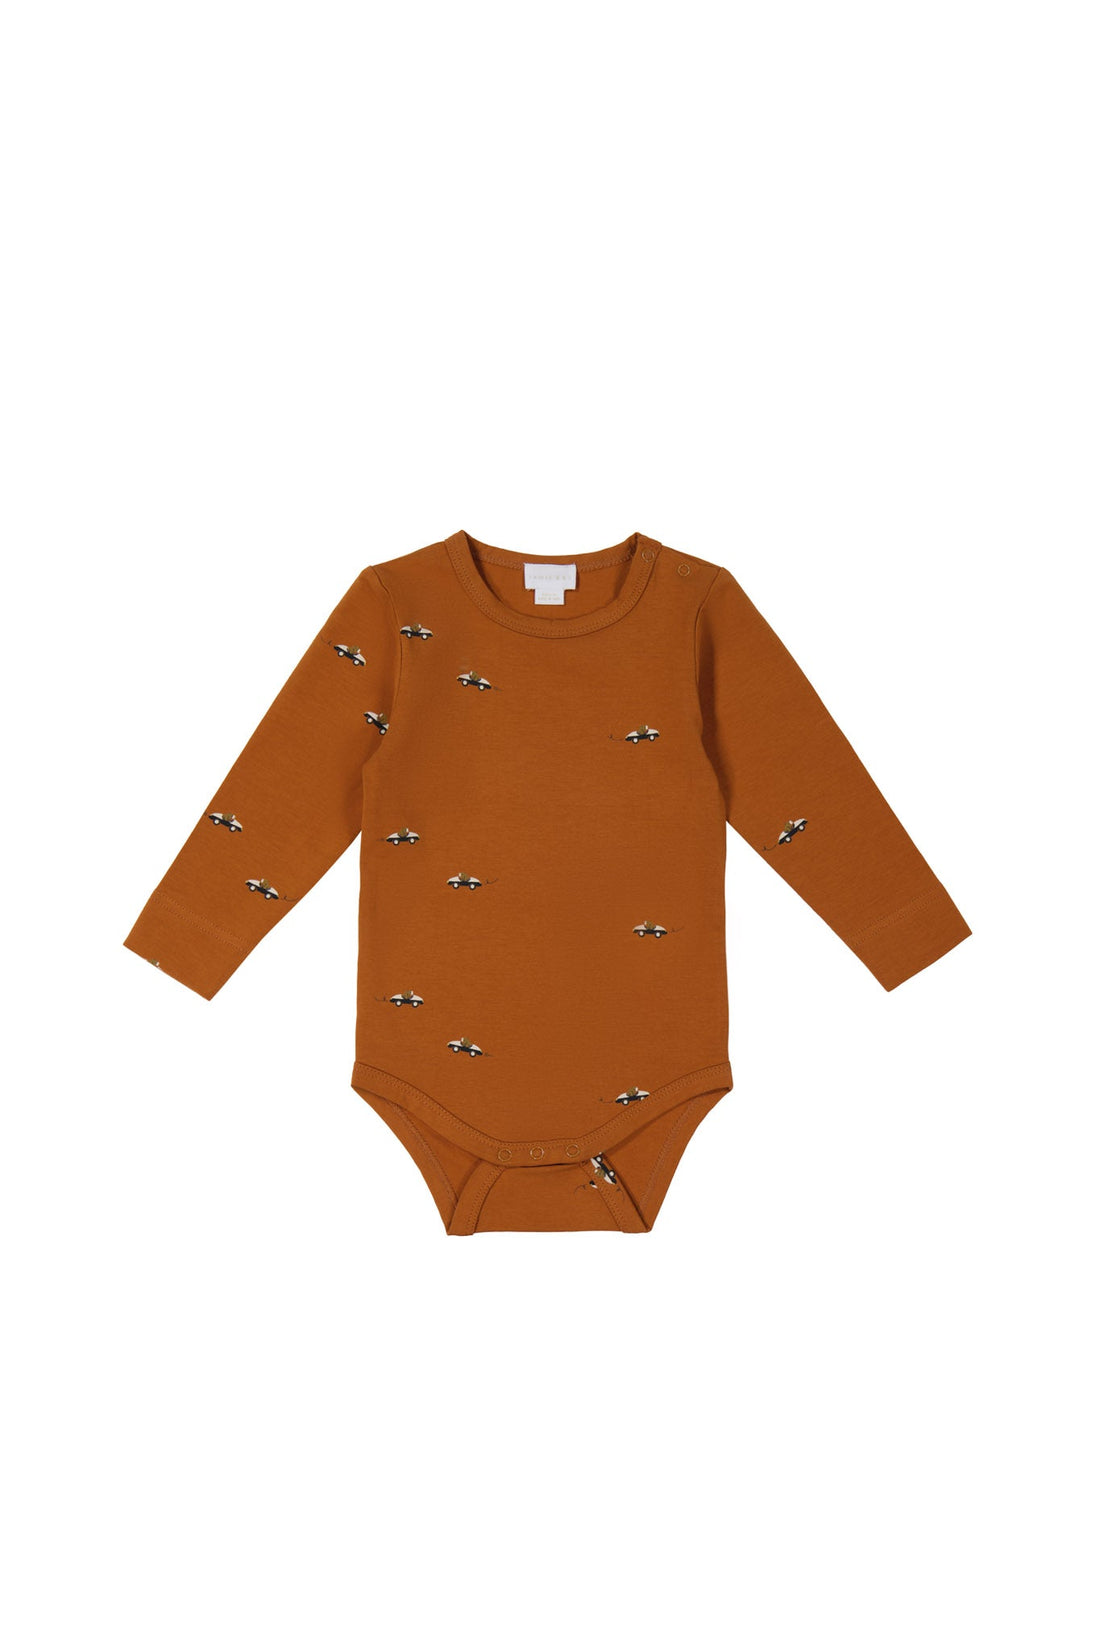 Organic Cotton Modal Fernley Long Sleeve Bodysuit - Zoomie Bears Ginger Childrens Bodysuit from Jamie Kay USA